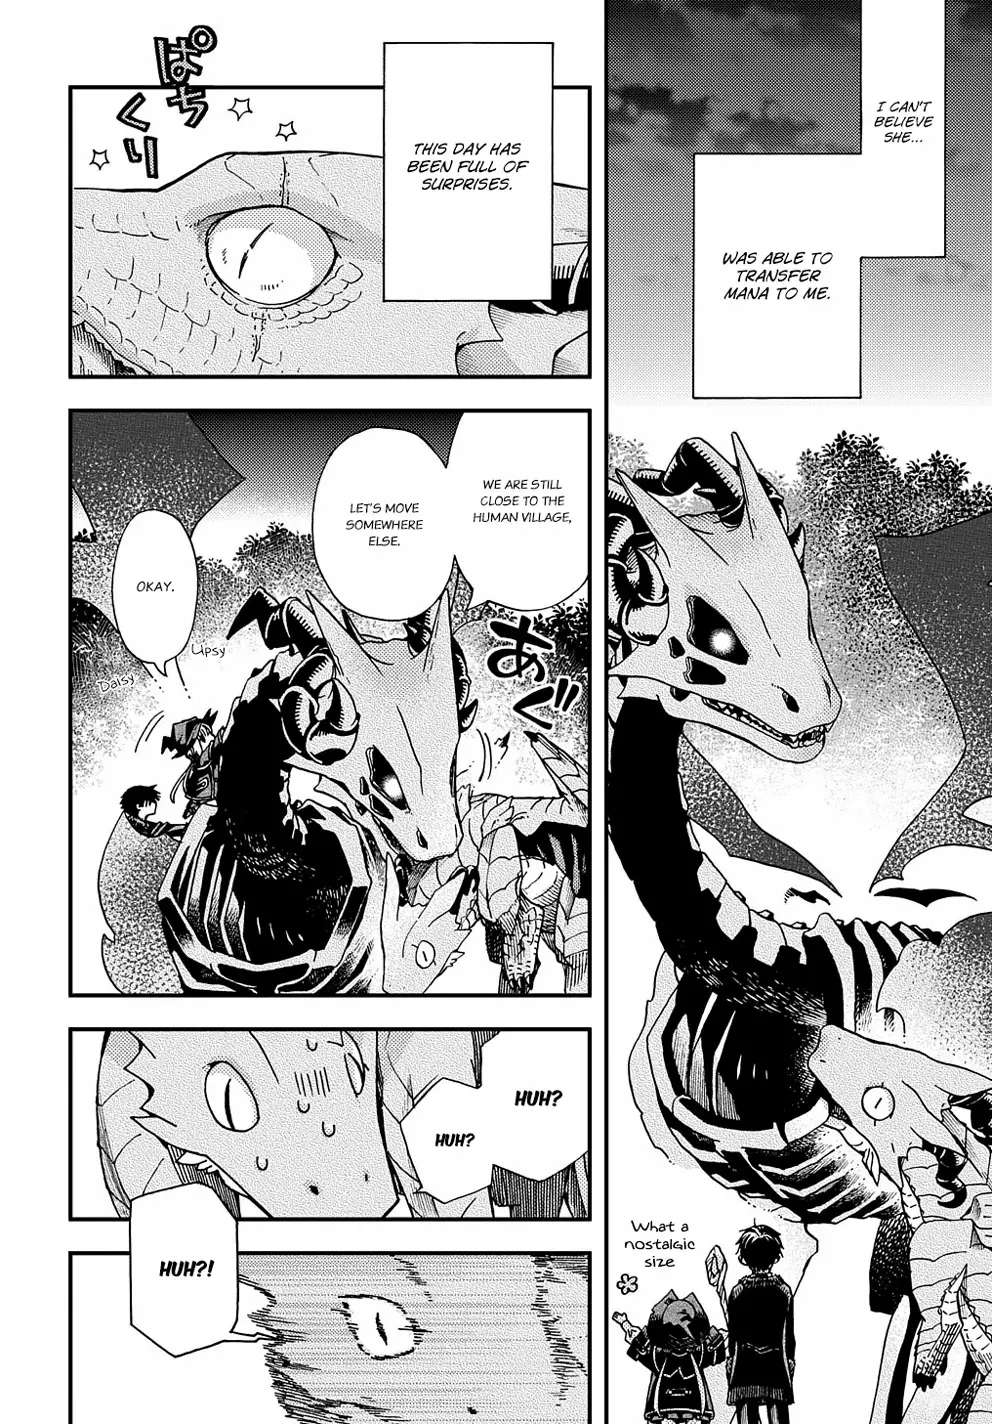 Hone Dragon No Mana Musume - 6 page 3-8e8088f1